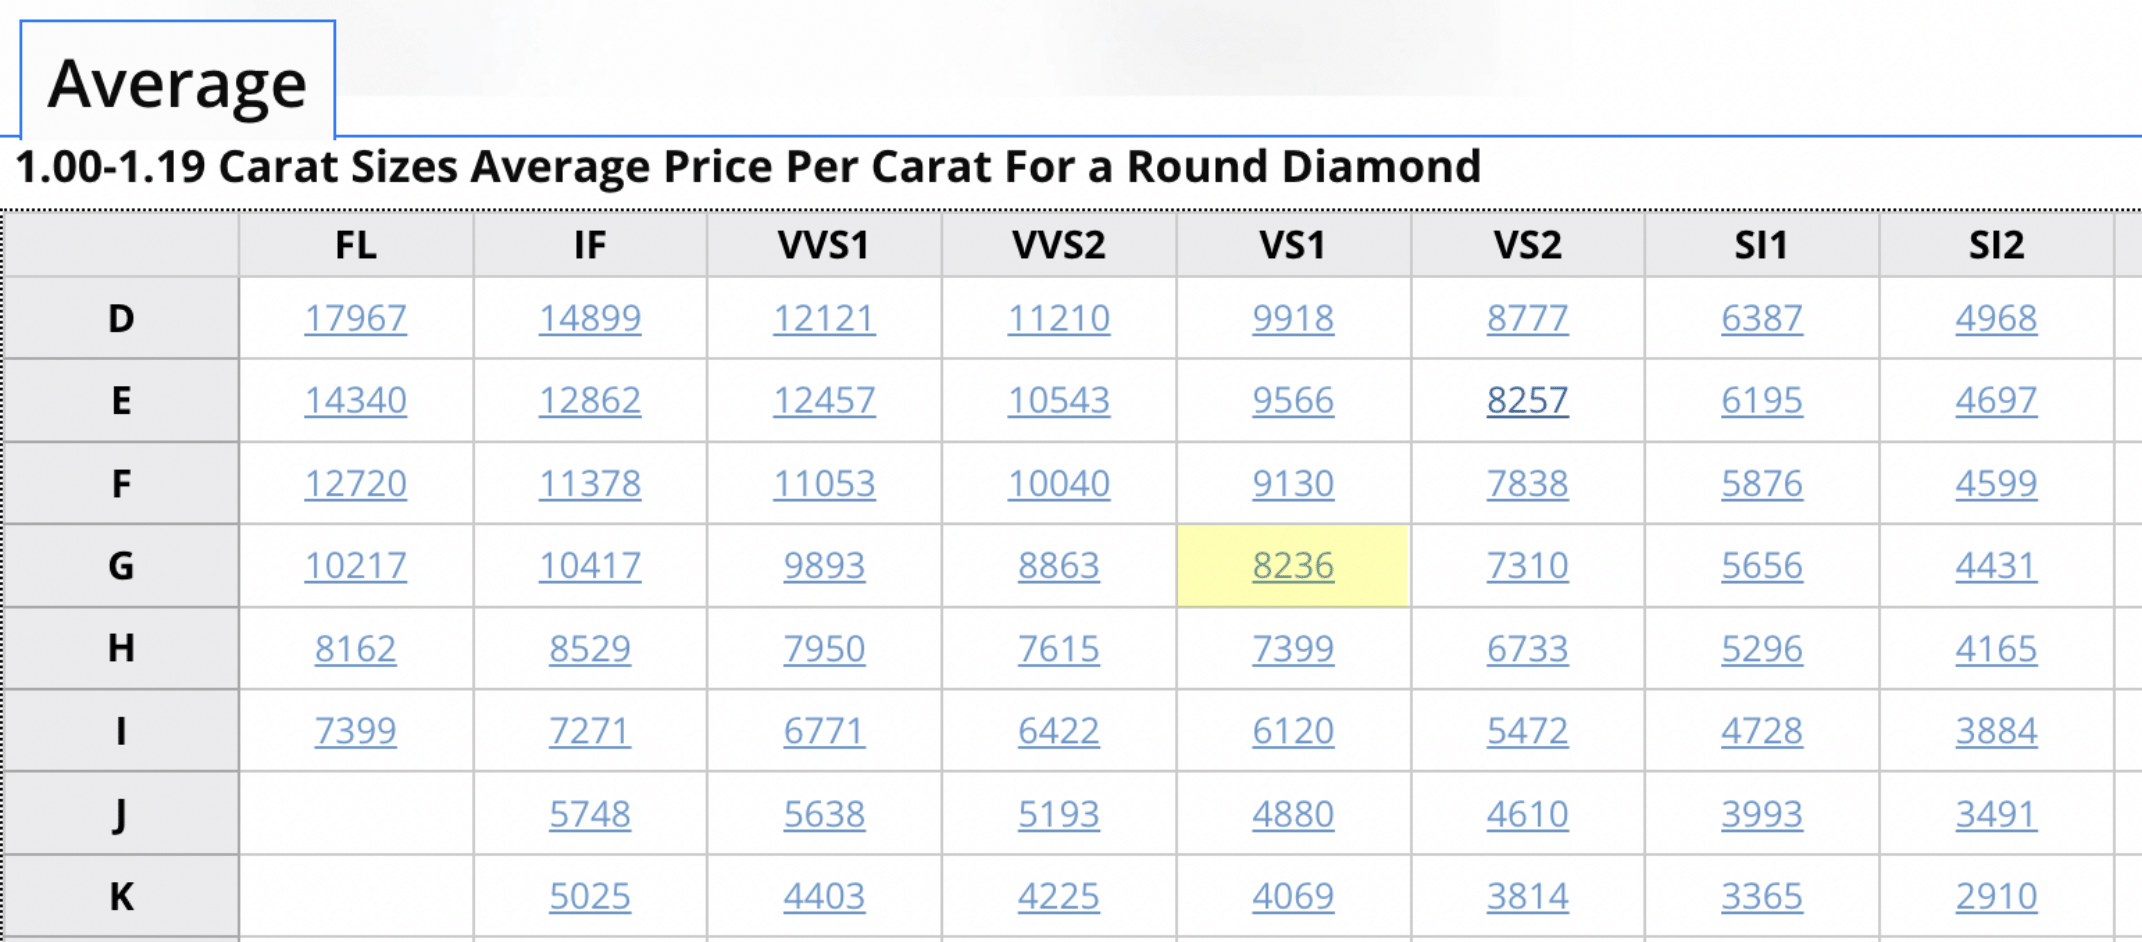 Average Price Per Carat For a Round Diamond - February 2023